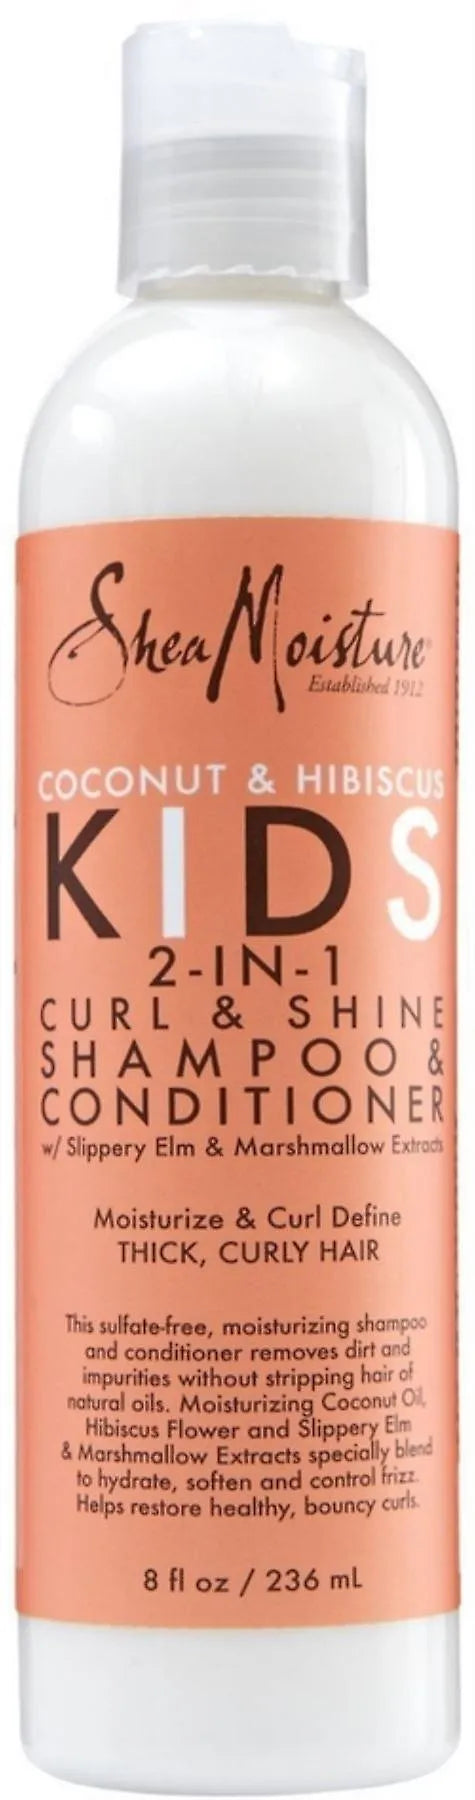 SHEA MOISTURE Coconut & Hibiscus Kids 2-In-1 Curl & Shine Shampoo & Conditioner 236ml